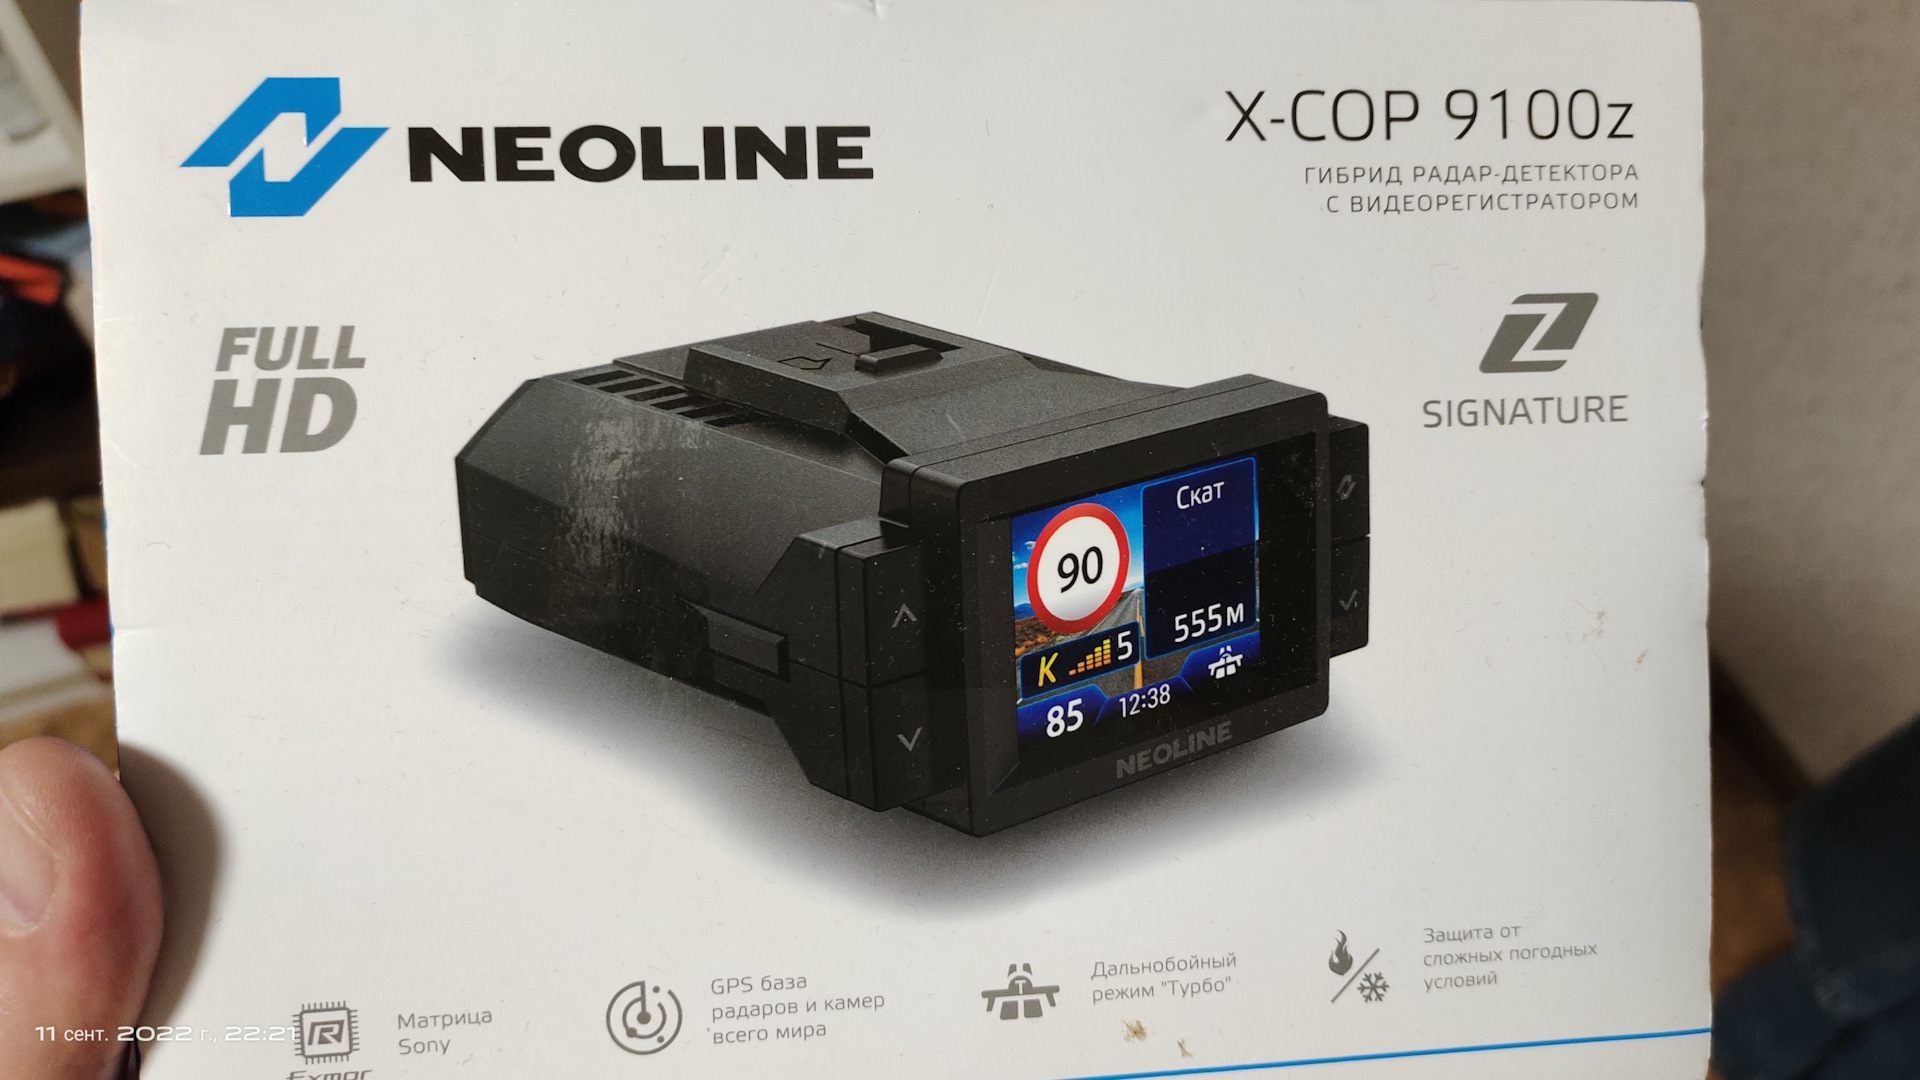 Neoline x cop 9100s цены. X-cop 9100. Neoline x-cop 9100. Neoline x-cop 9100z. Видеорегистратор Neoline x-cop 9100s.